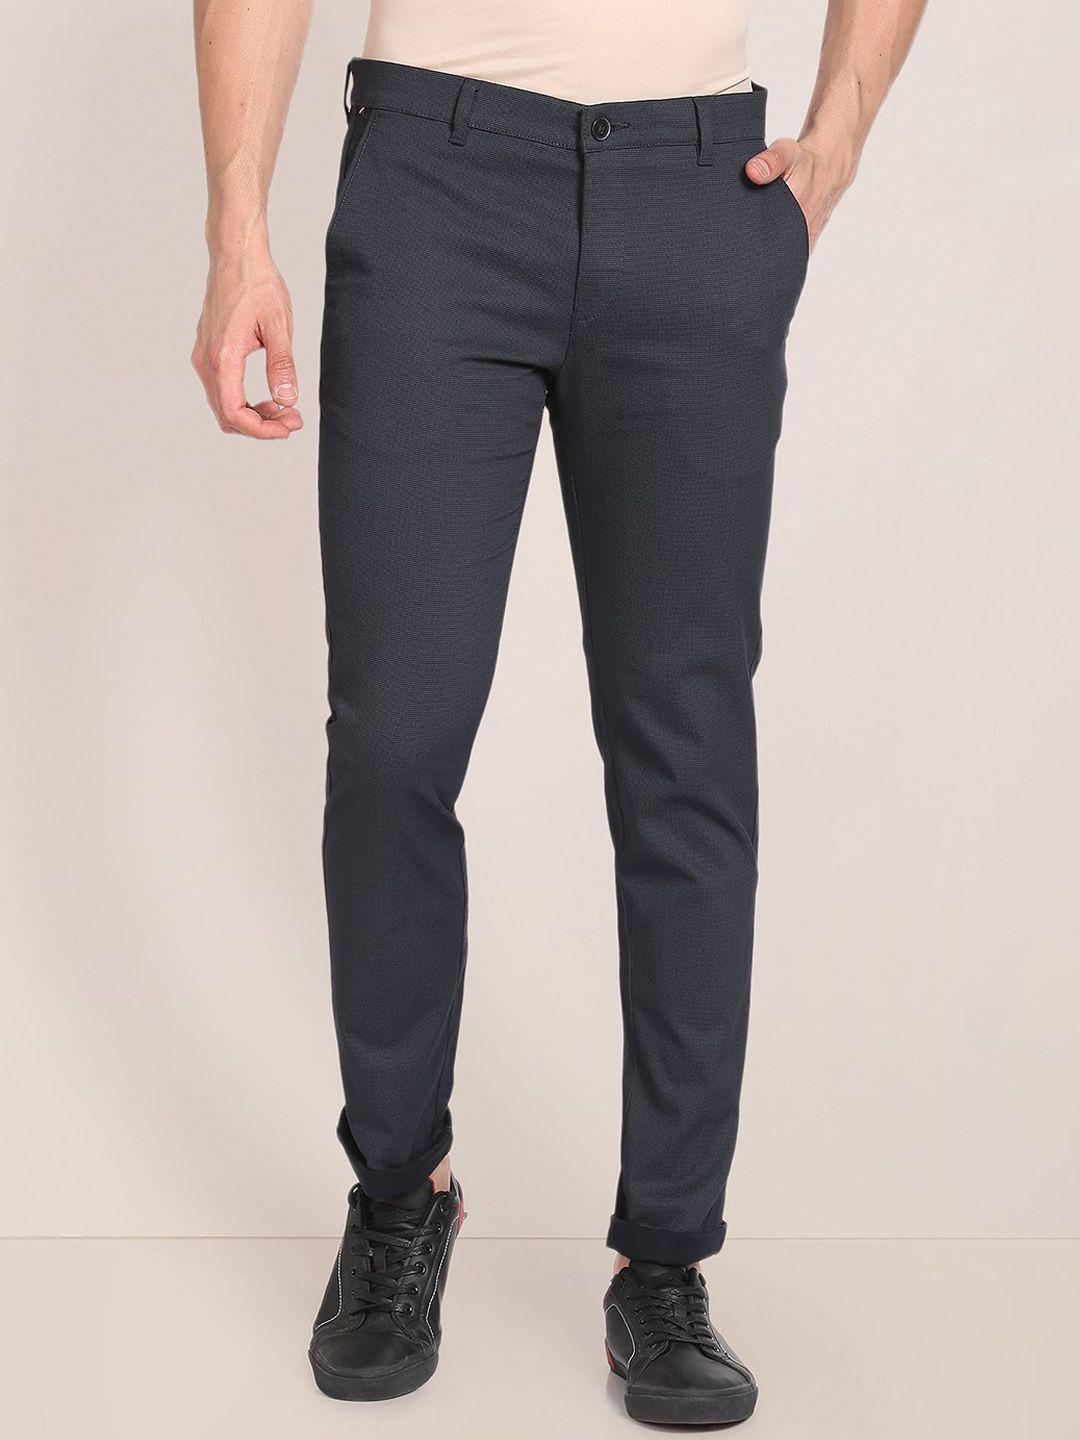 u-s-polo-assn-men-blue-printed-slim-fit-trousers